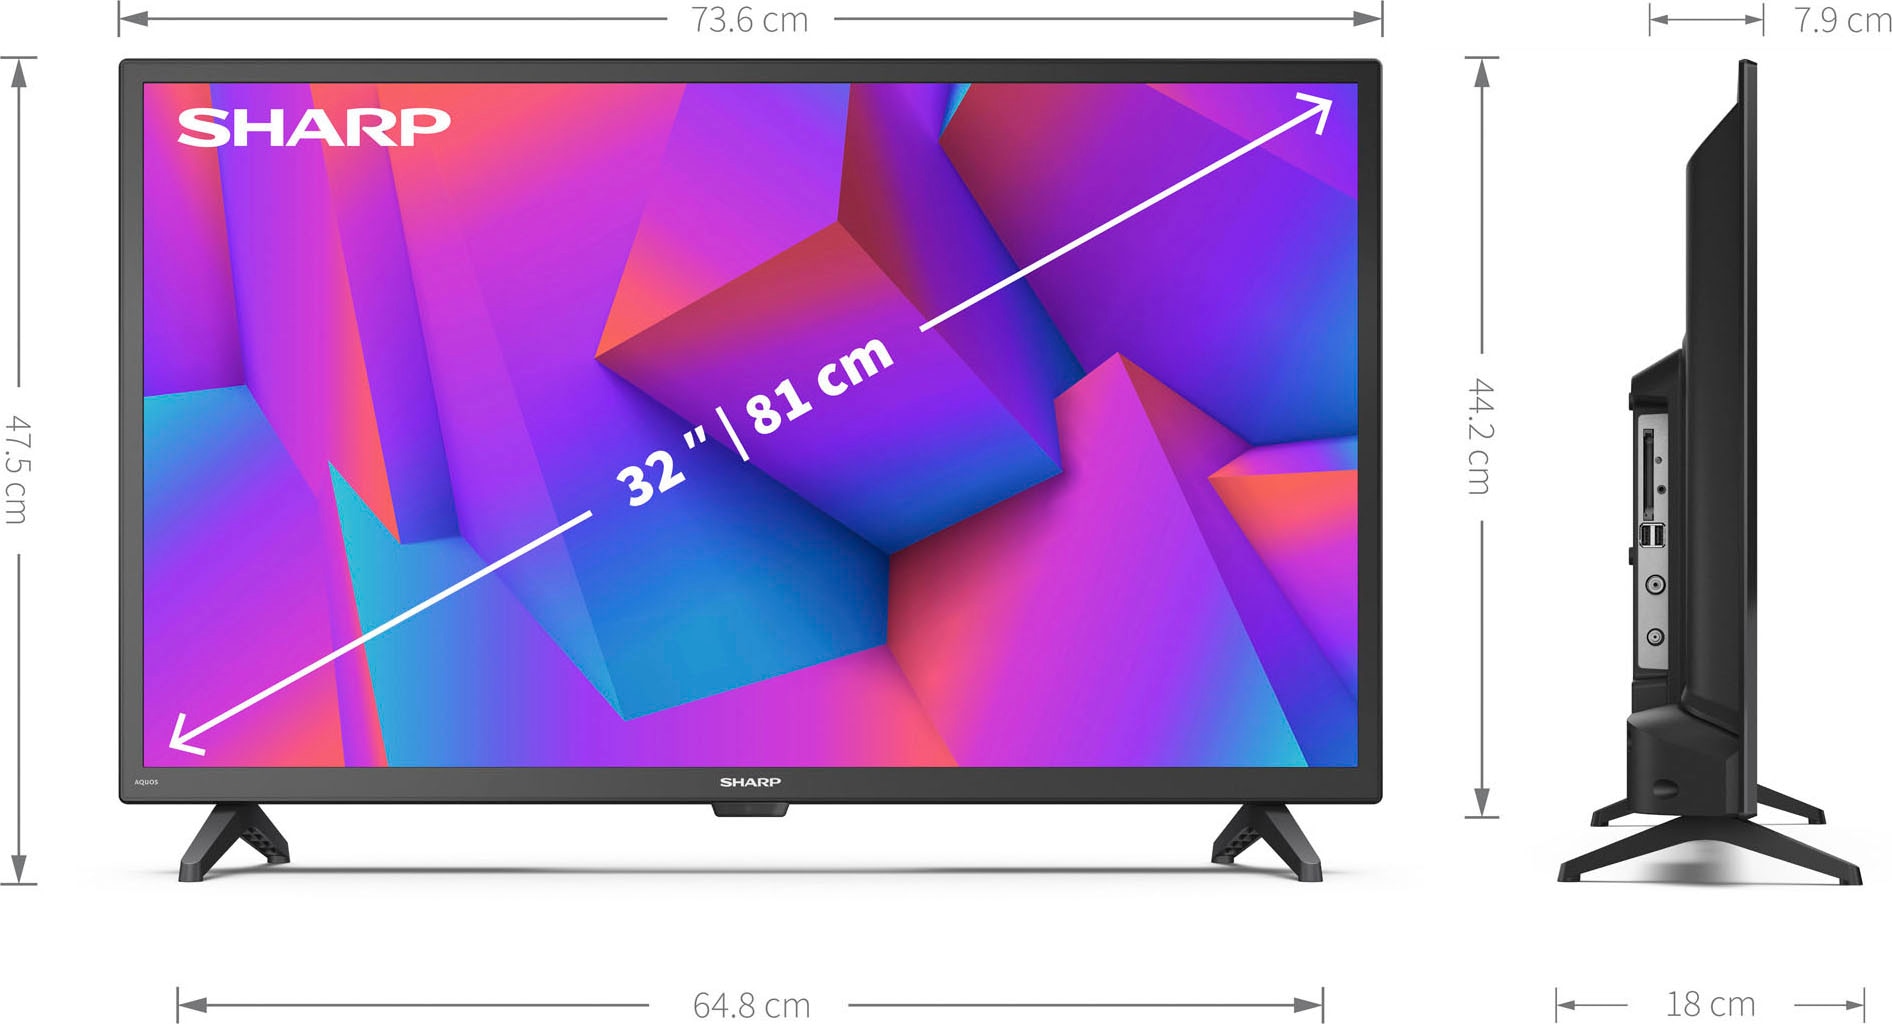 Rechnung cm/32 Zoll, auf ready, LED-Fernseher, HD Sharp bestellen Smart-TV 81